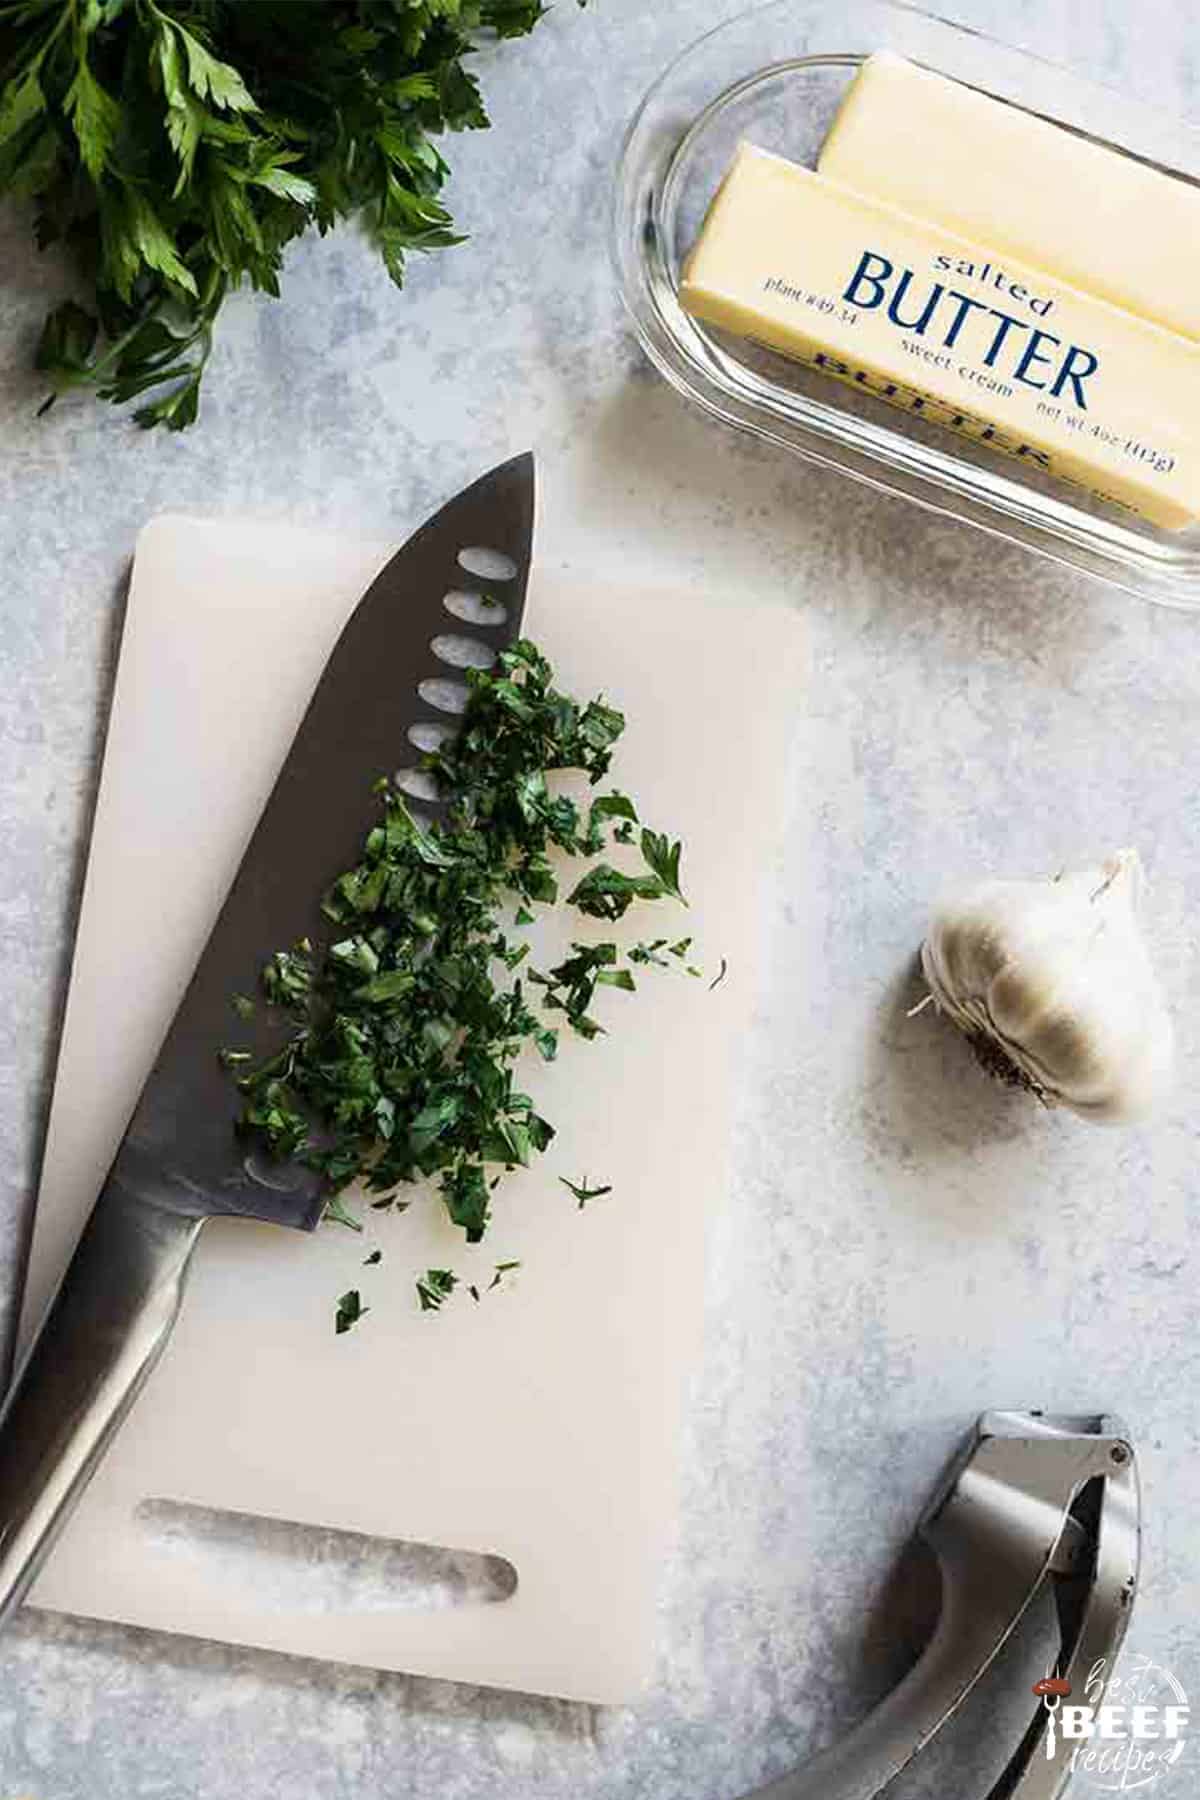 Chopping fresh herbs to make garlic butter